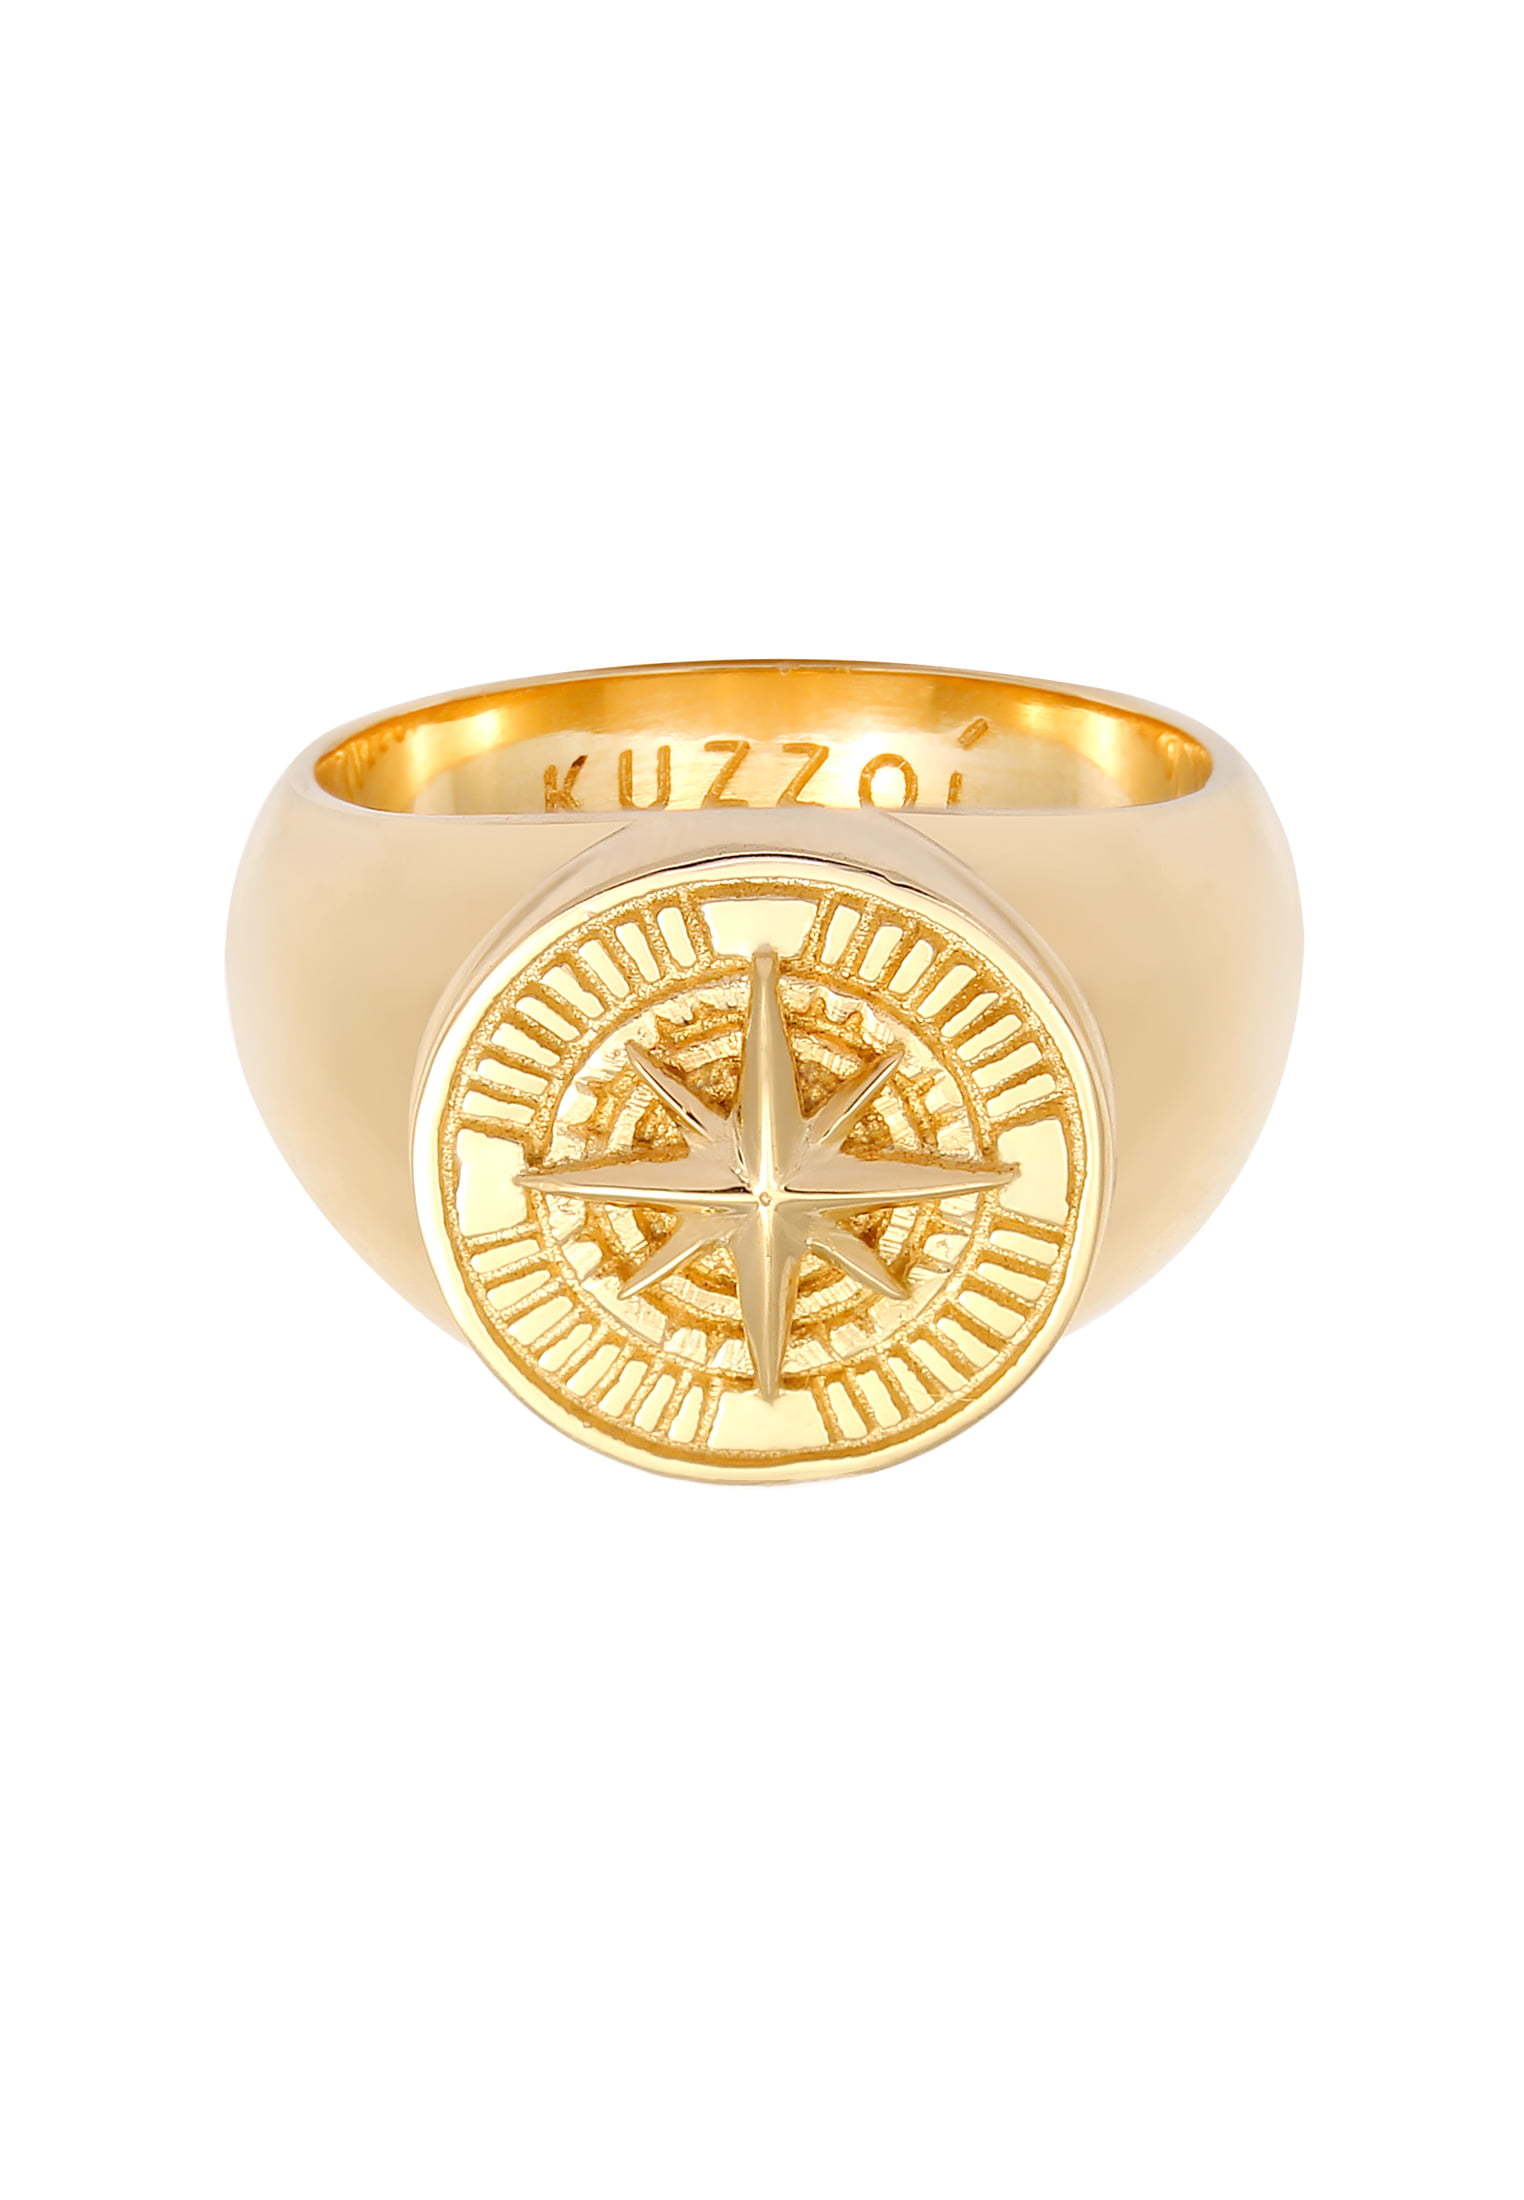 KUZZOI Men\'s Signet Ring Compass 925 Silver 14K Gold Plated Size 9-11